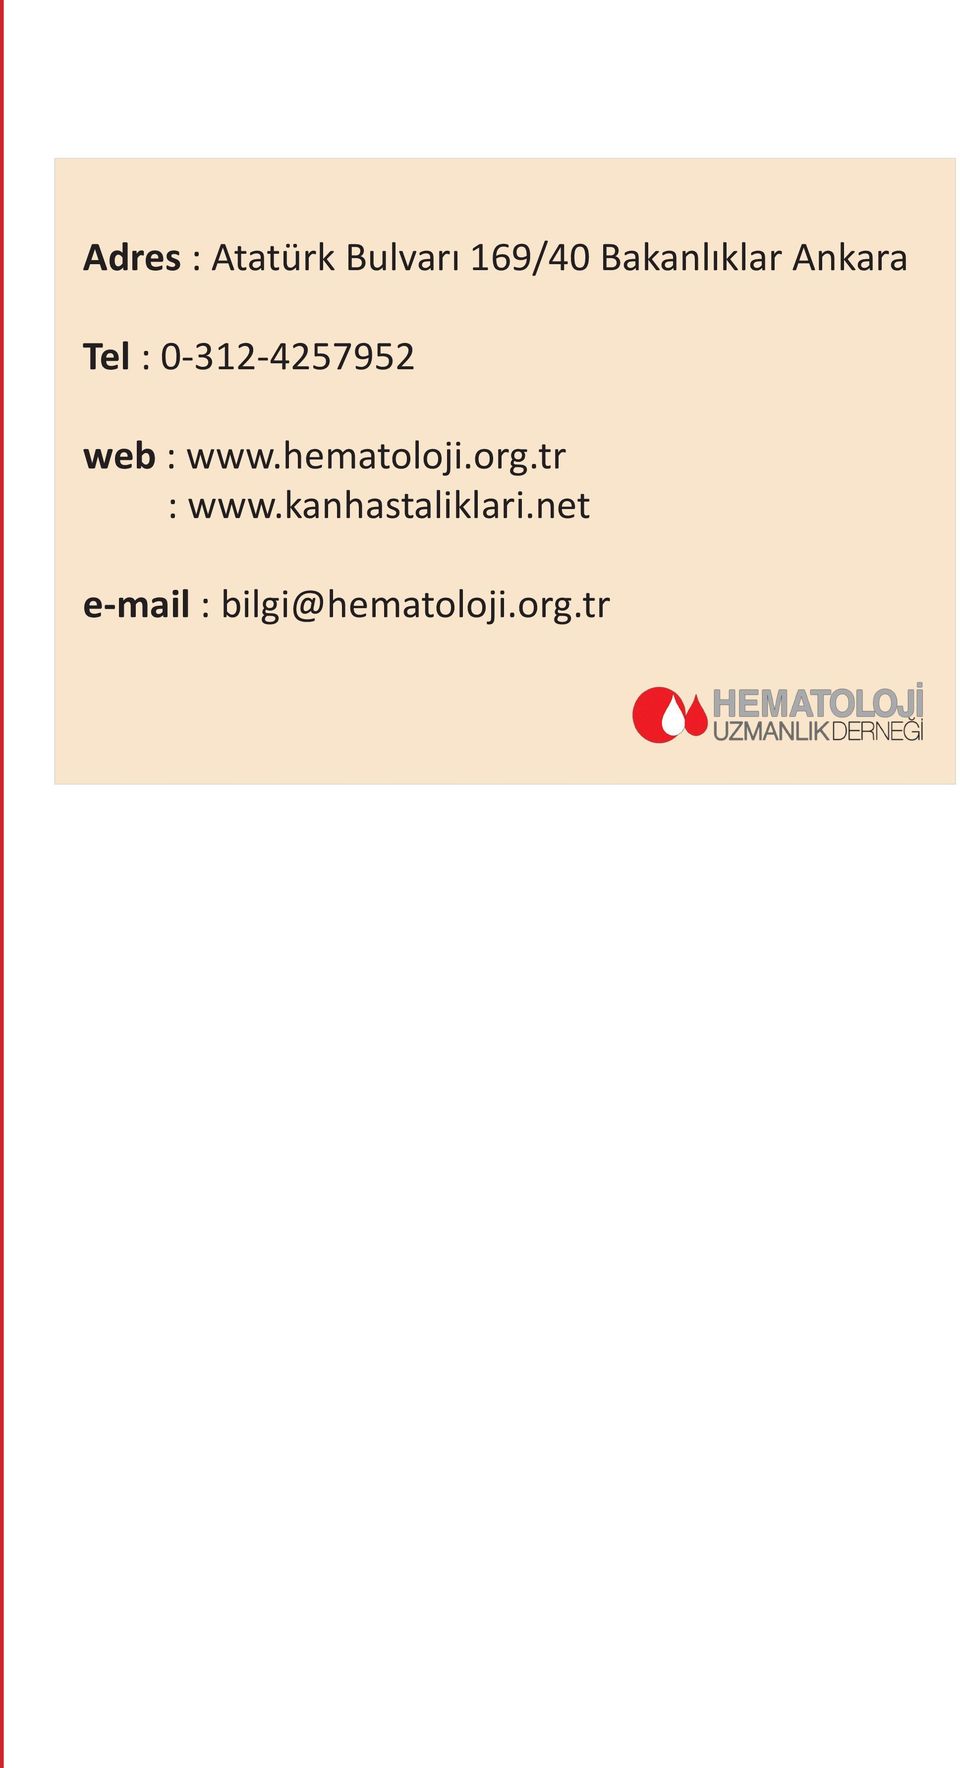 web : www.hematoloji.org.tr : www.